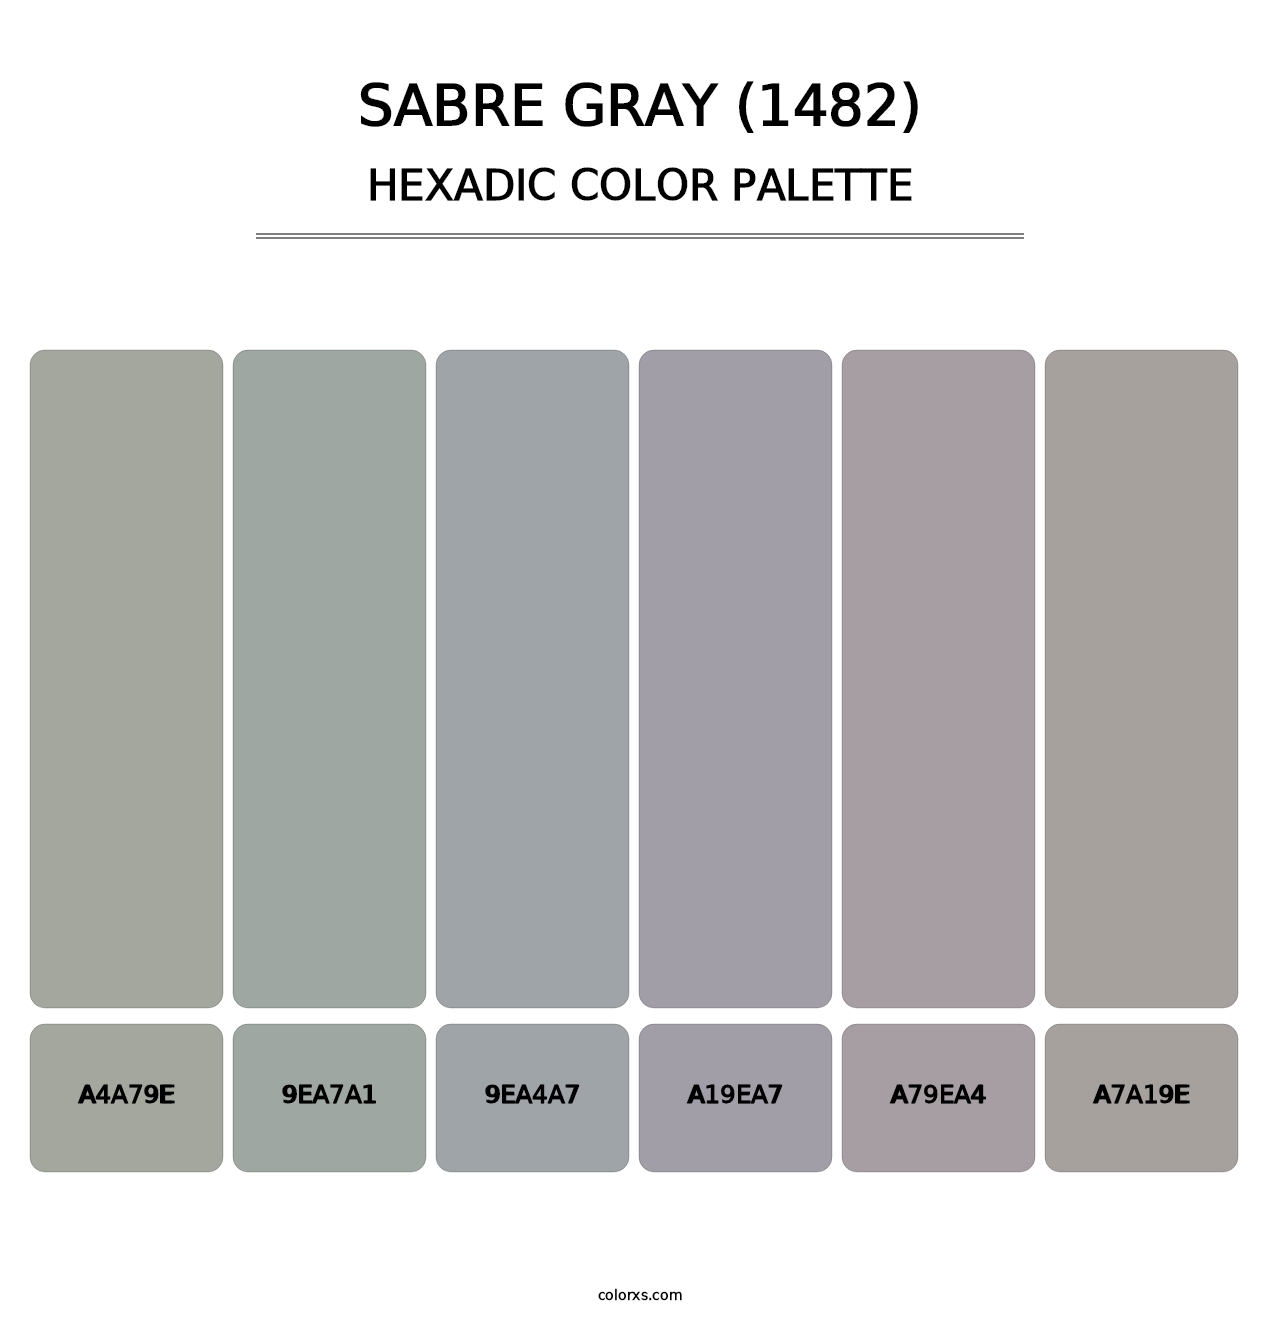 Sabre Gray (1482) - Hexadic Color Palette